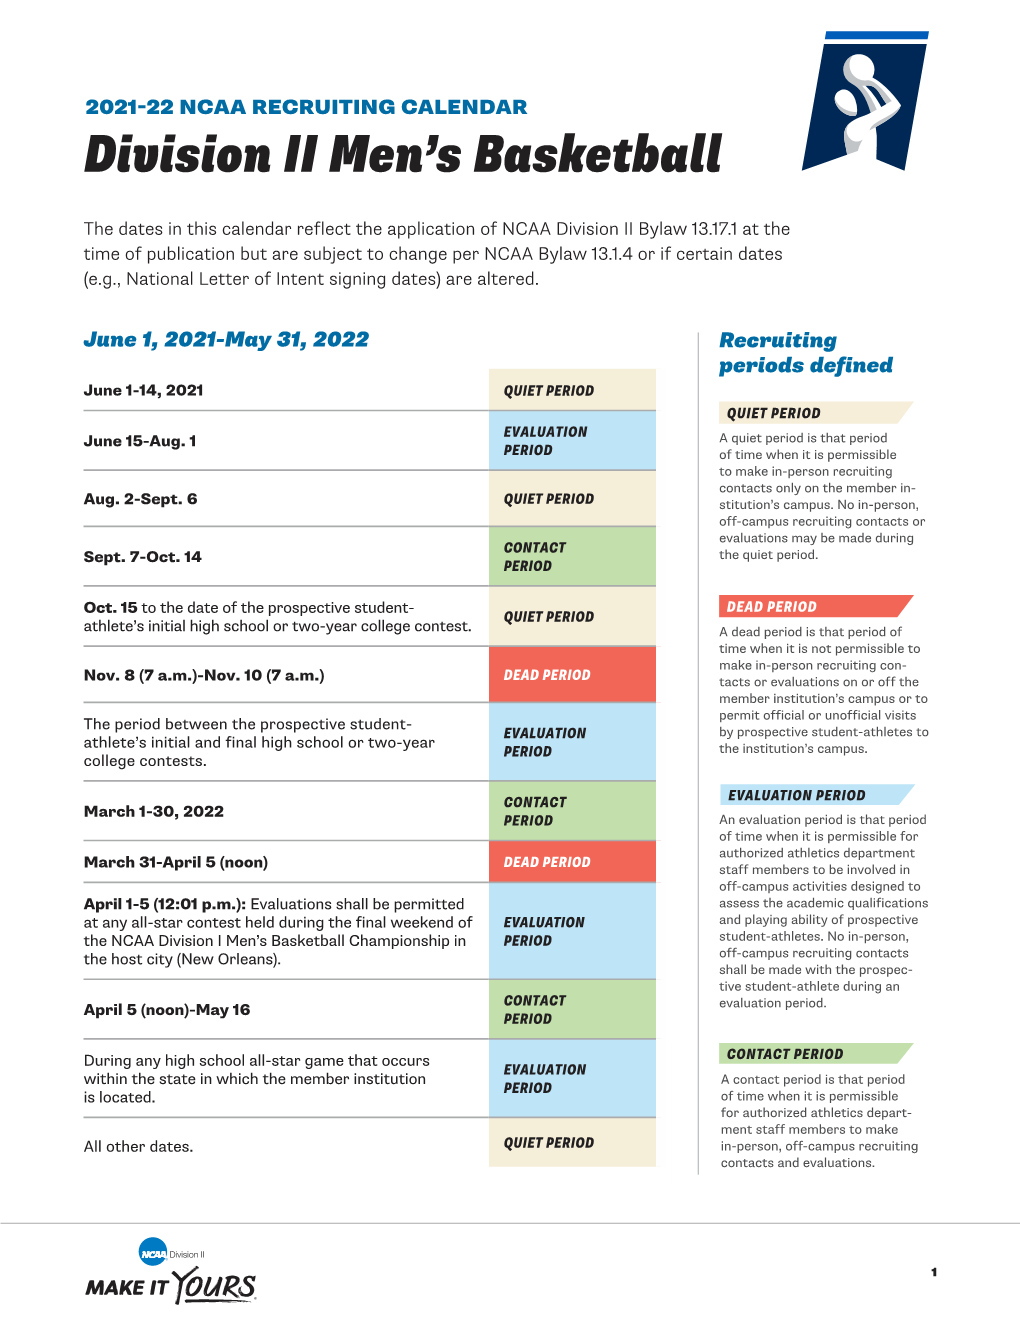 Division II Men's Basketball